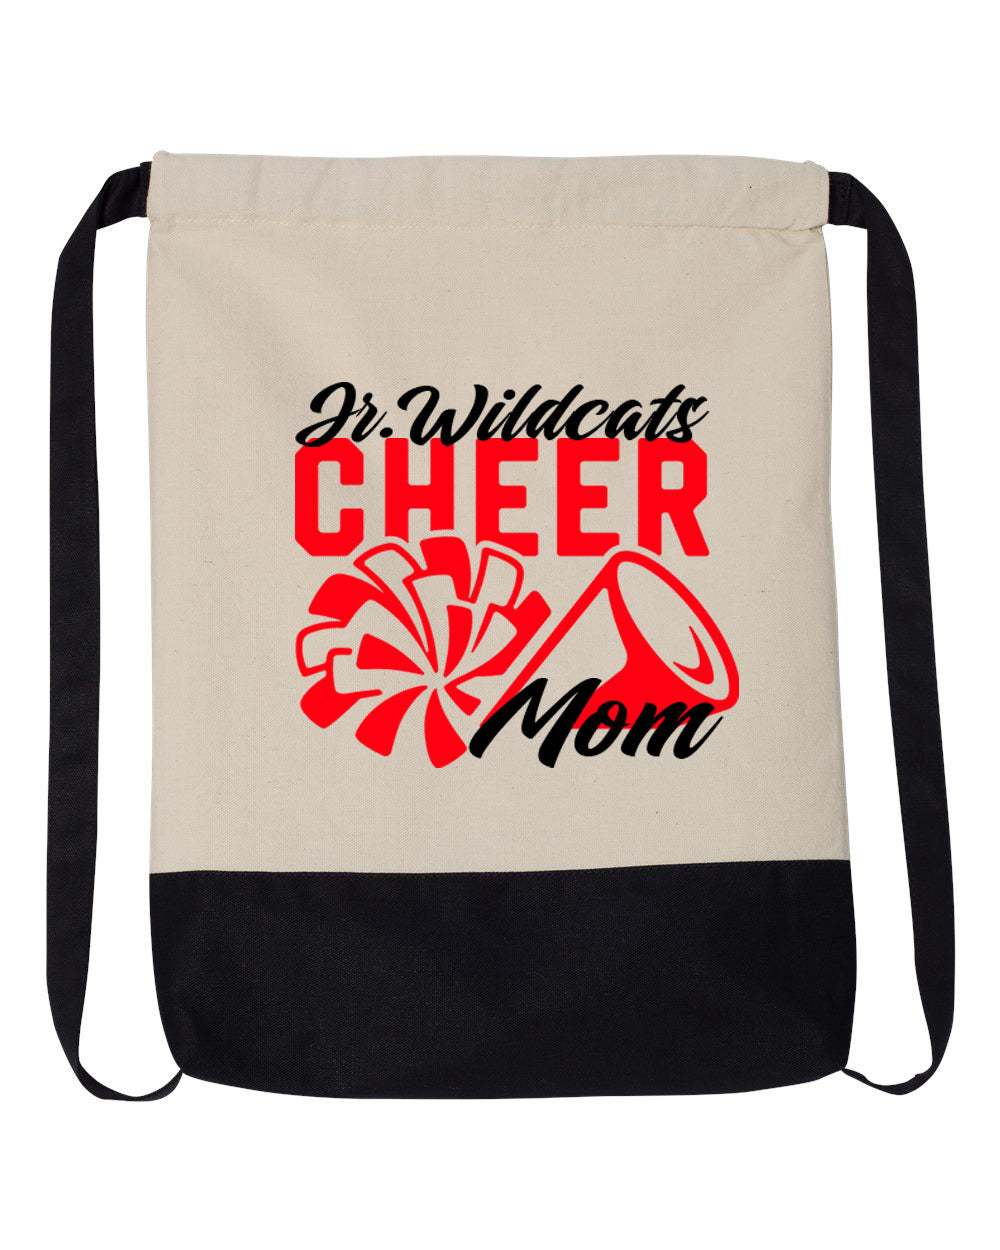 High Point Cheer Design 4 Drawstring Bag